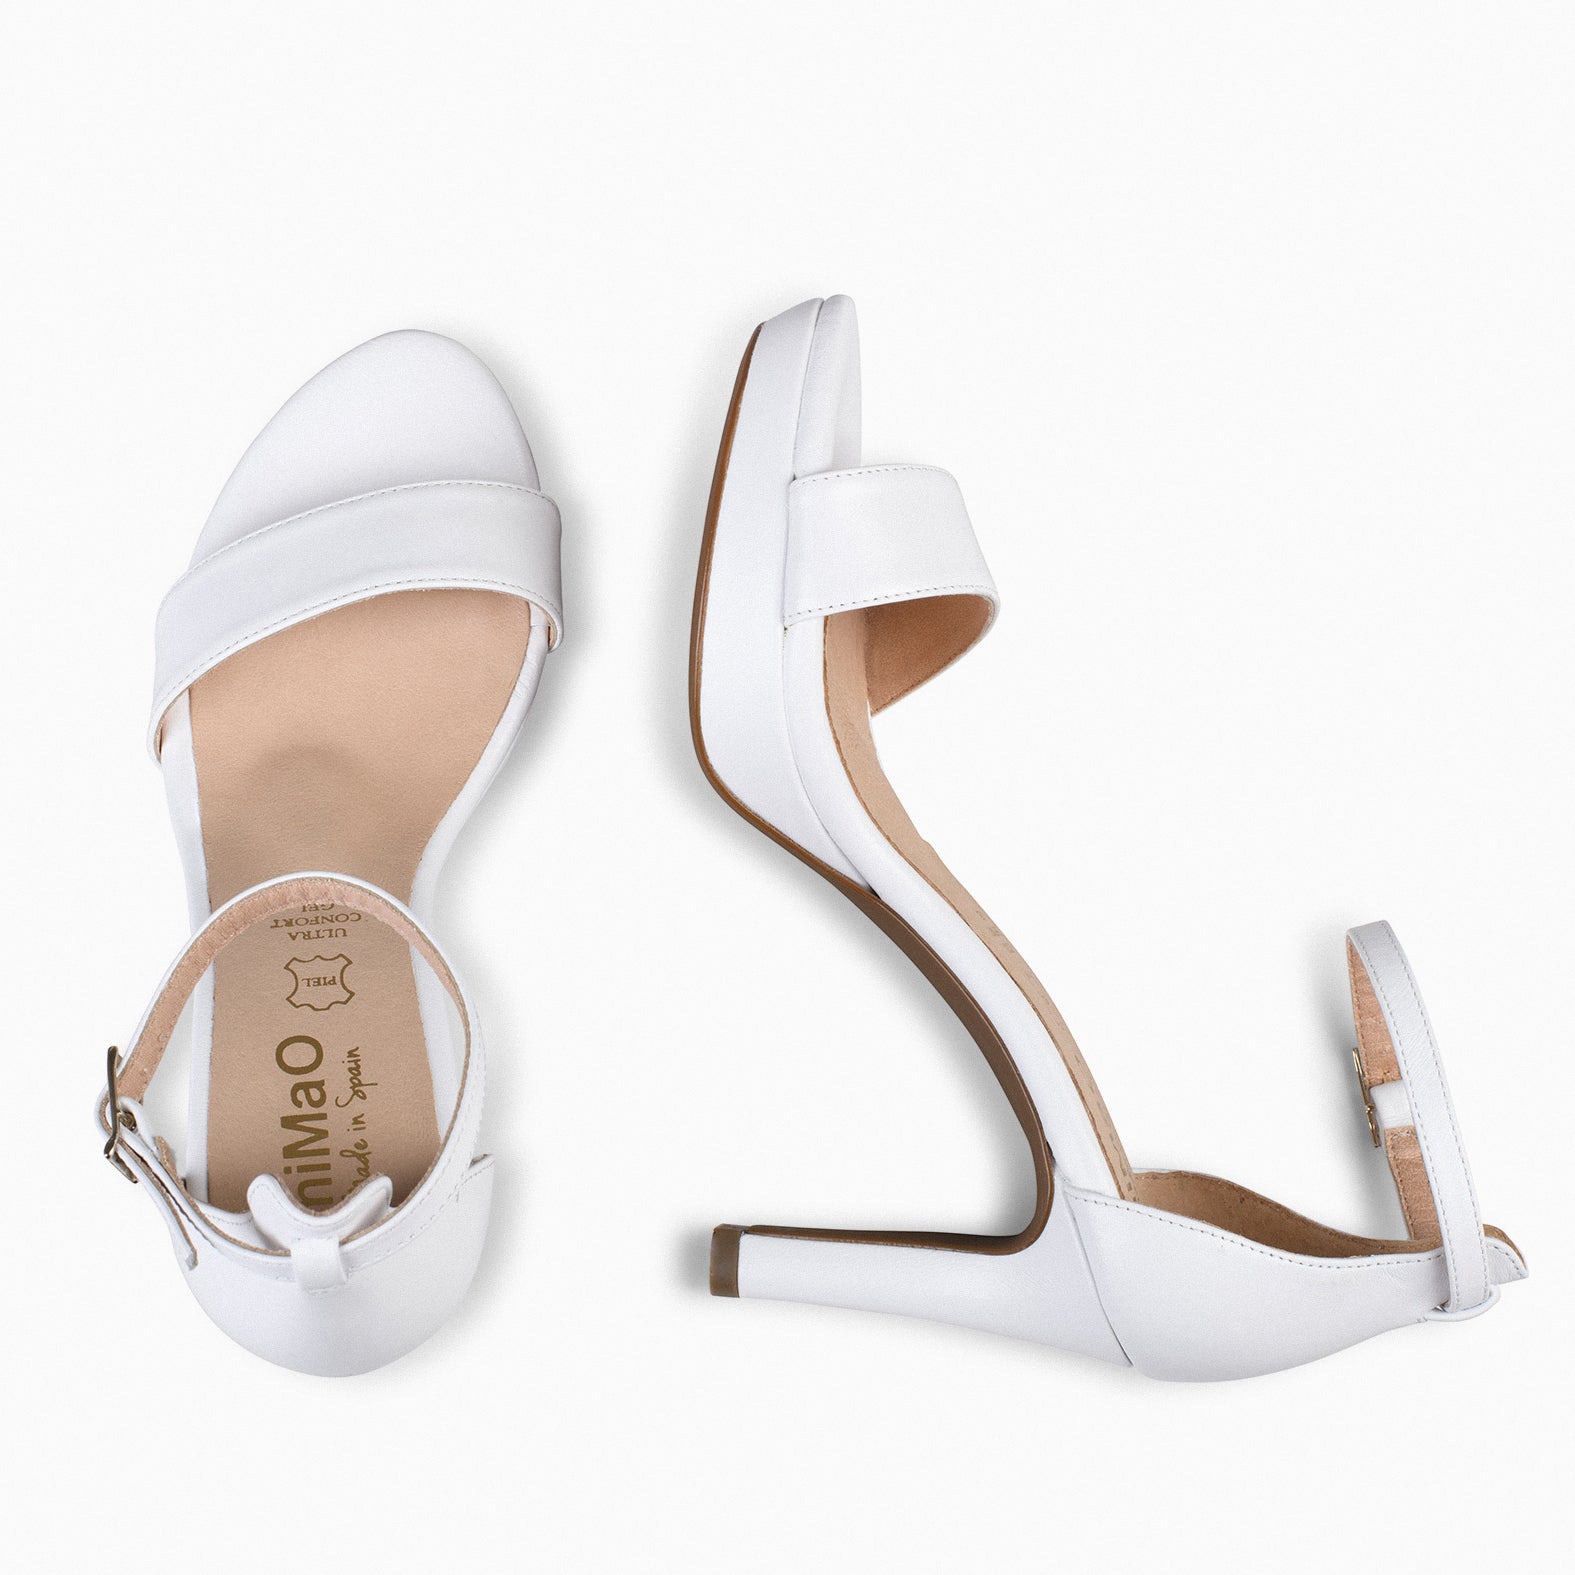 PARTY – WHITE high-heeled platform sandals